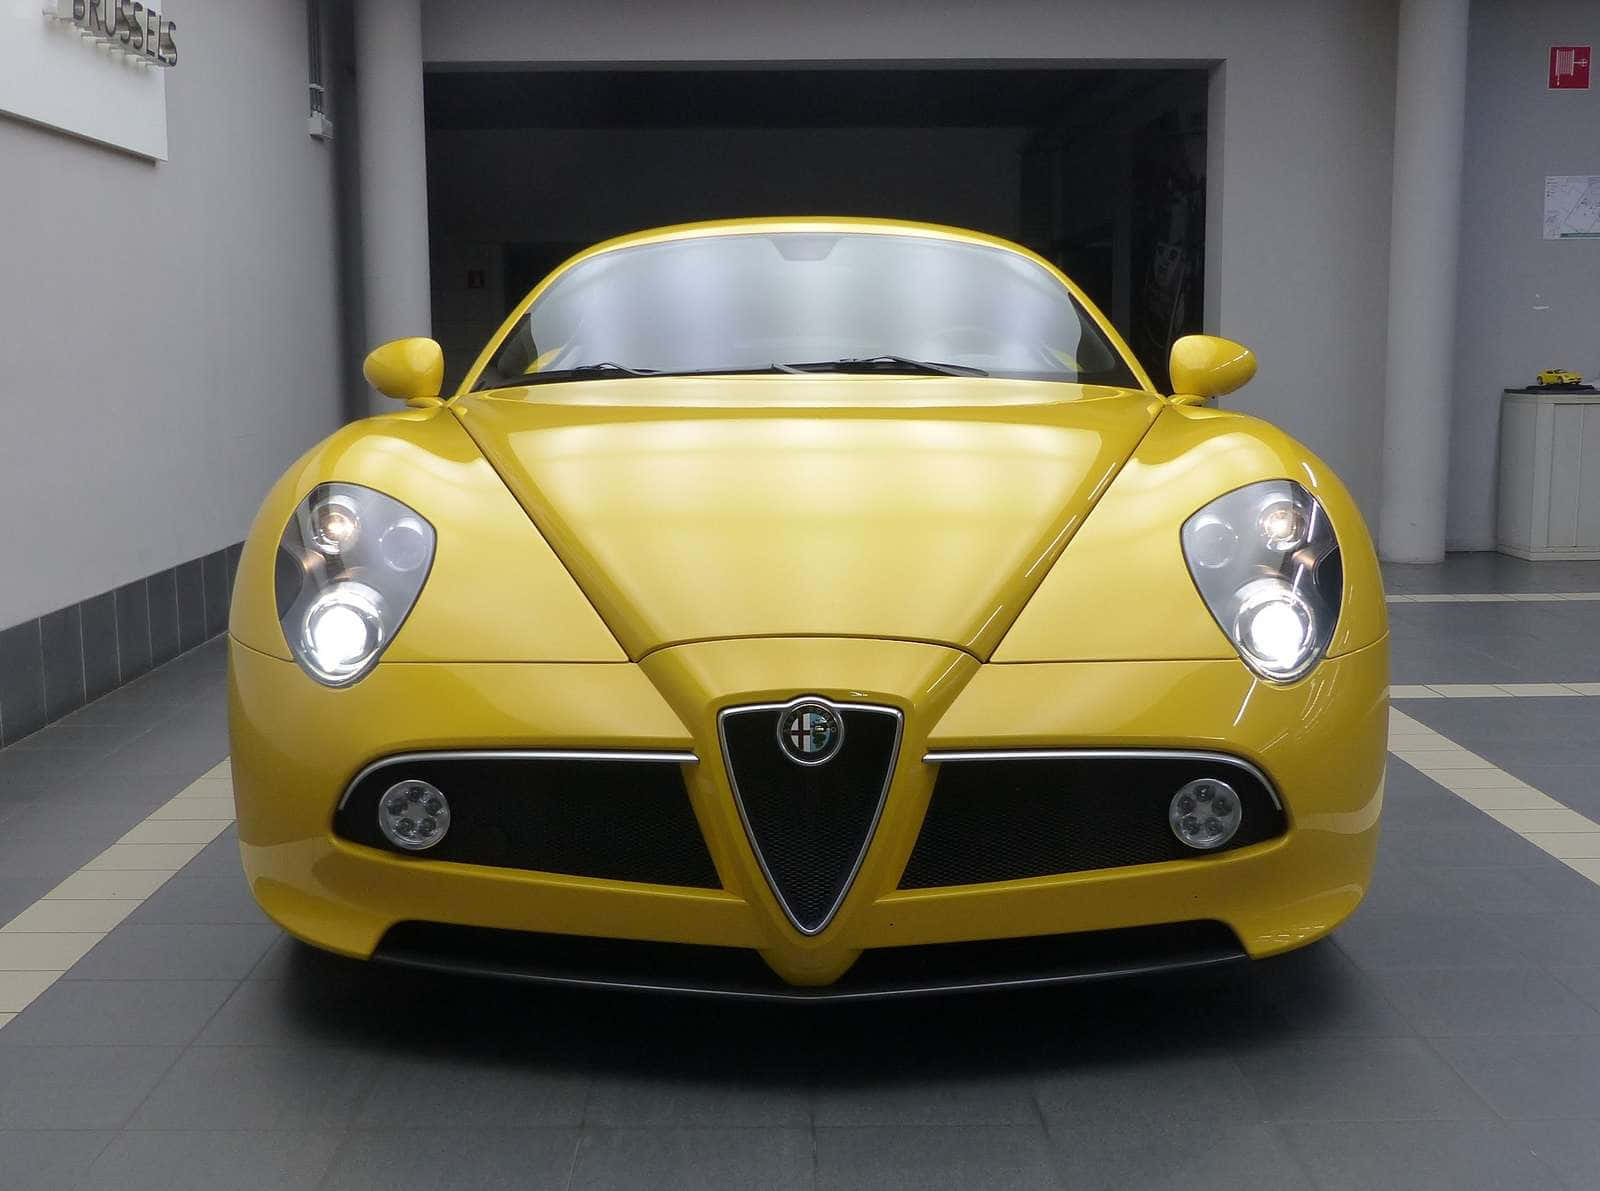 Sleek Alfa Romeo 8c Competizione in motion Wallpaper